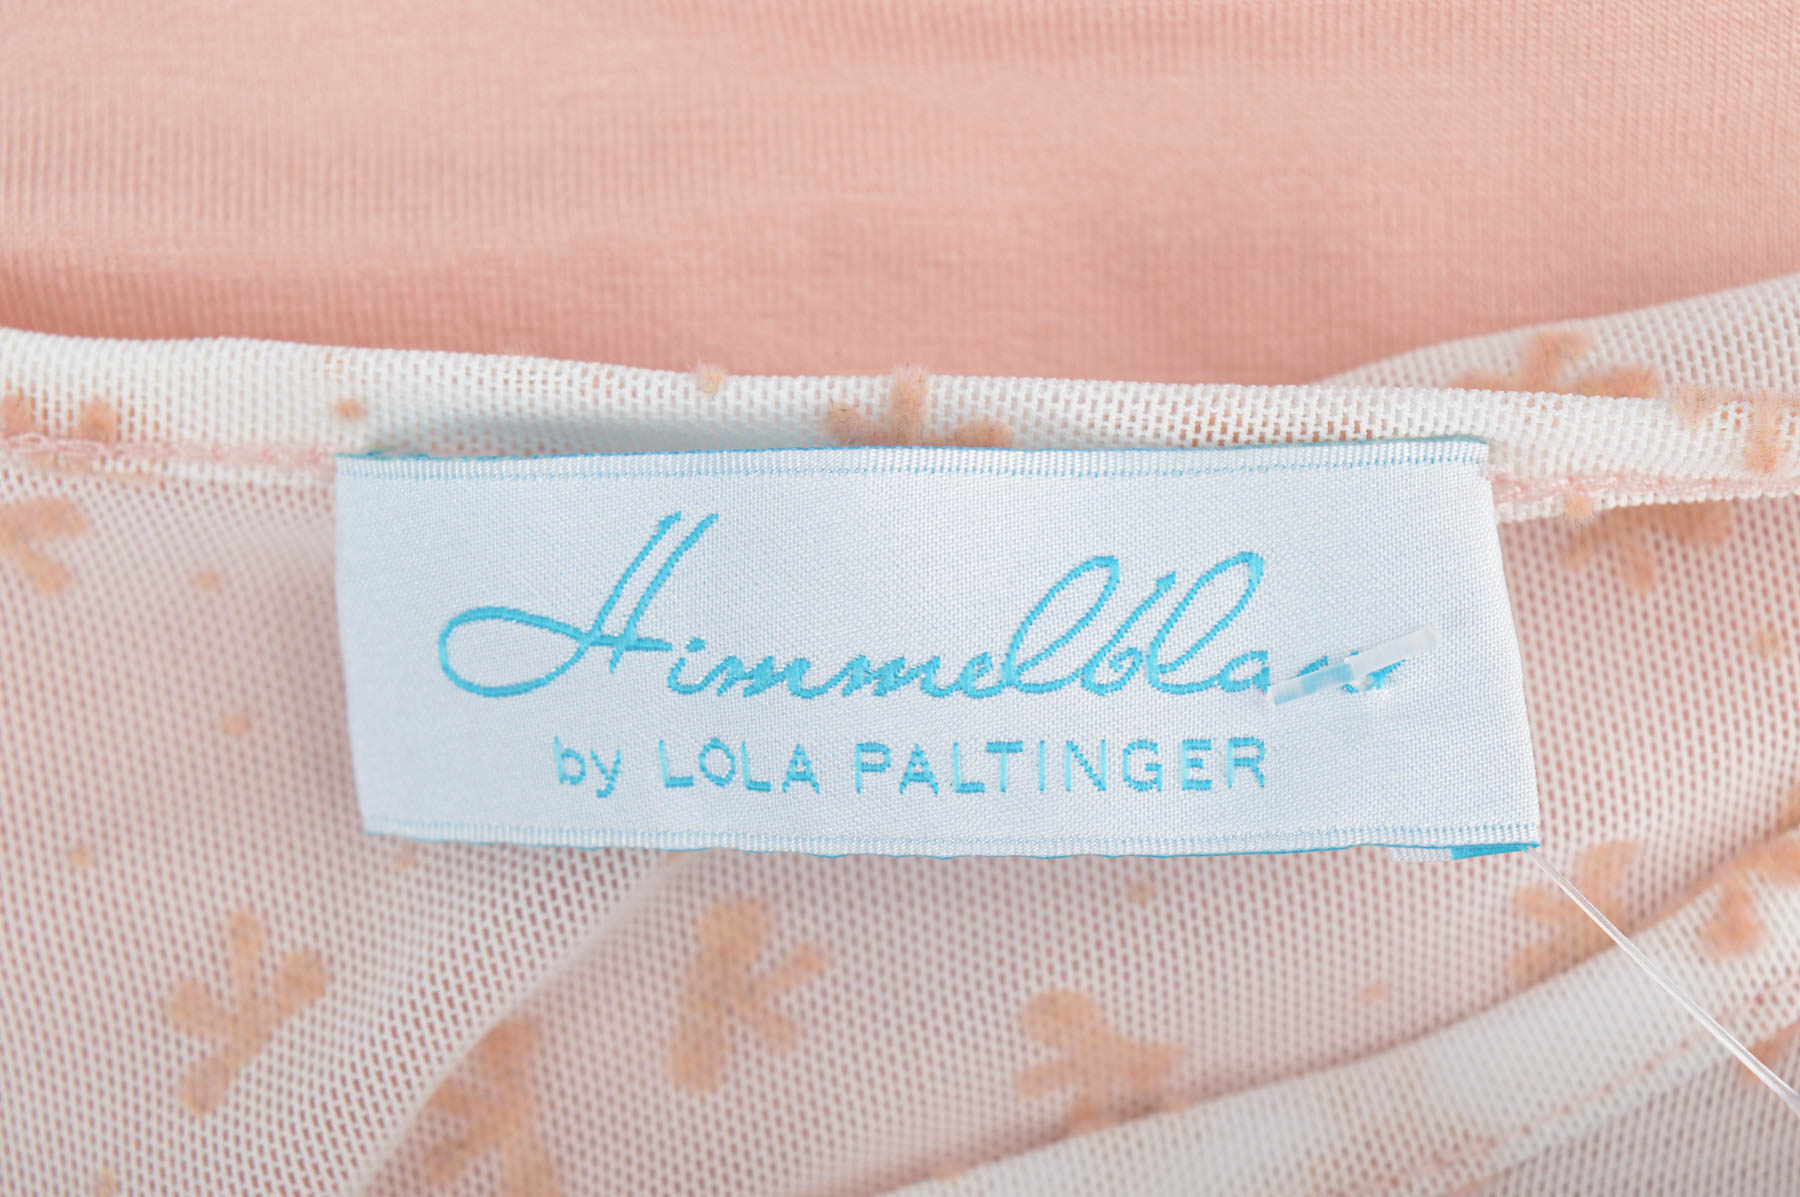 Koszulka damska - Himmelblau by Lola Paltinger - 2